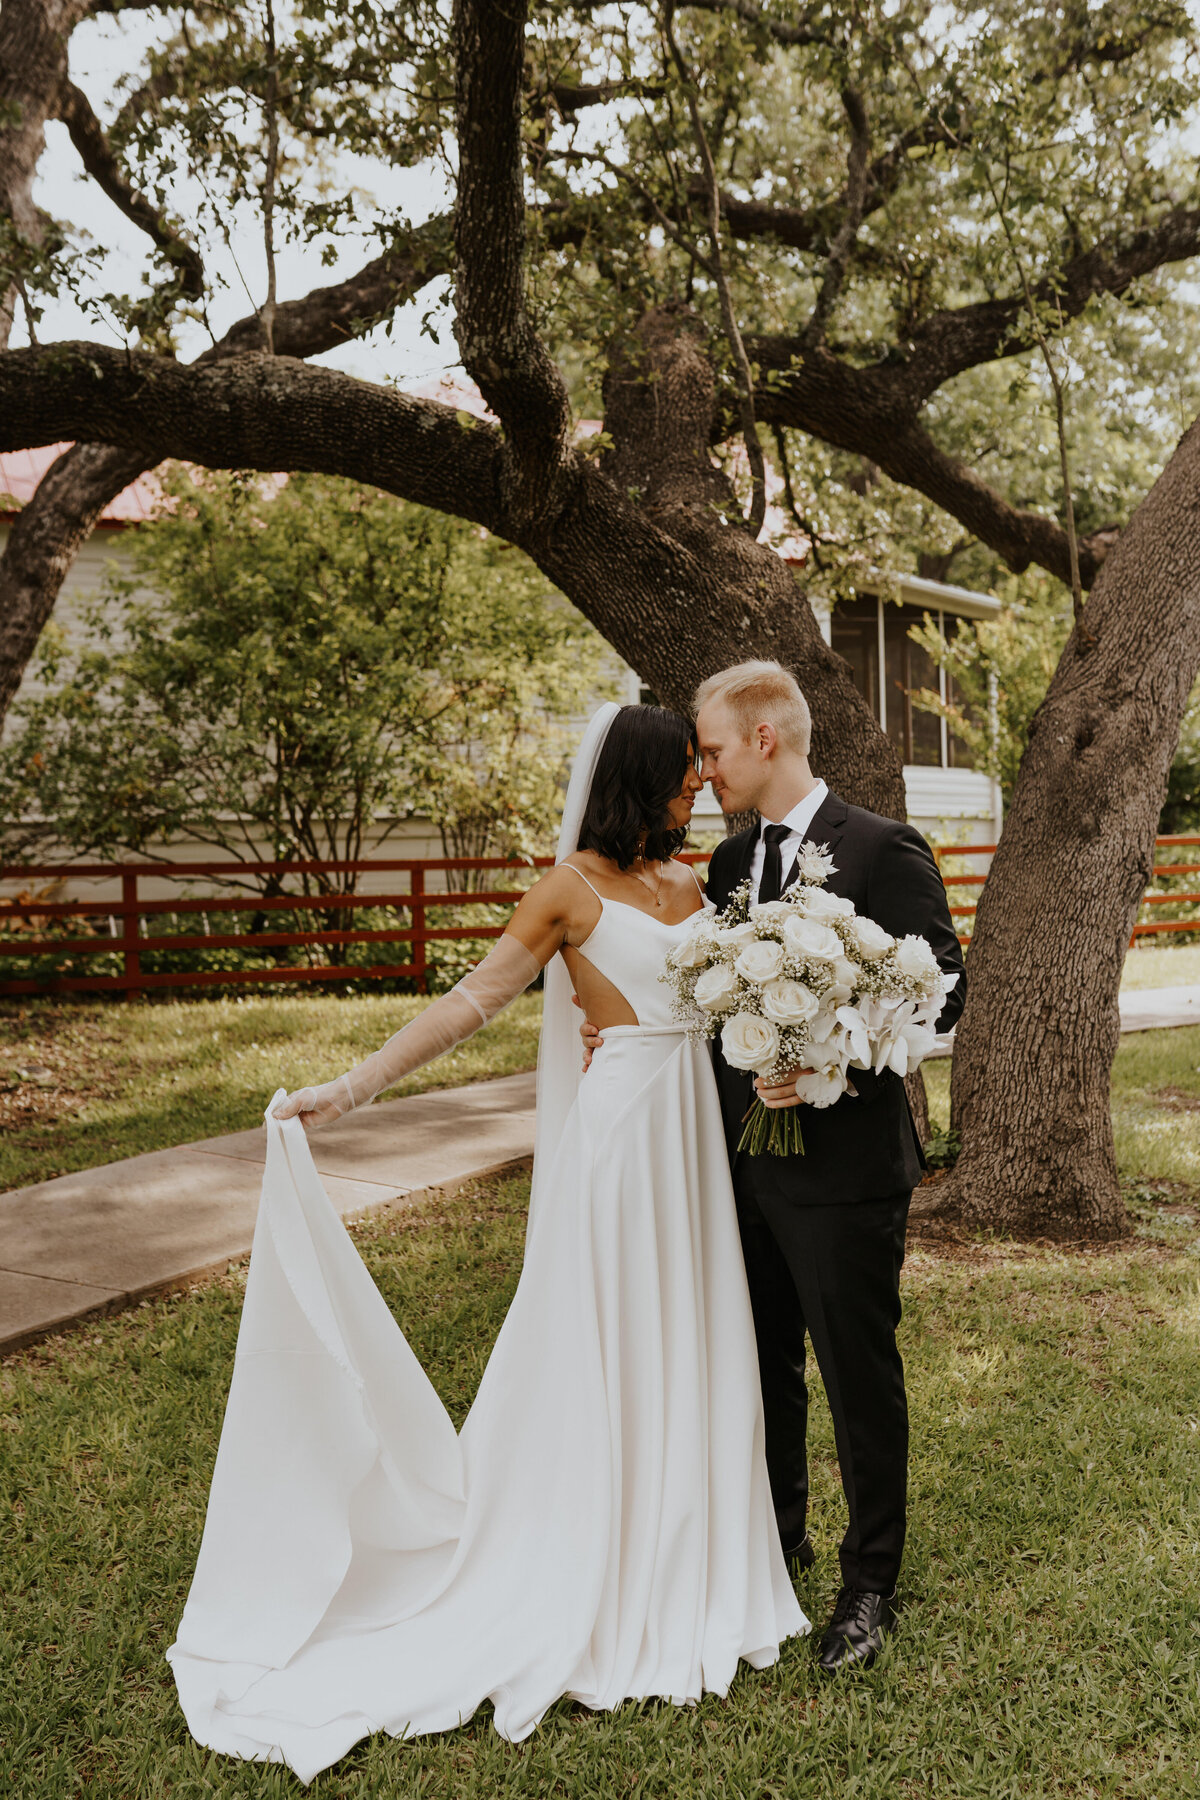 Petsch Wedding South Congress Hotel Austin, TX Photography by Raquel King Photo294